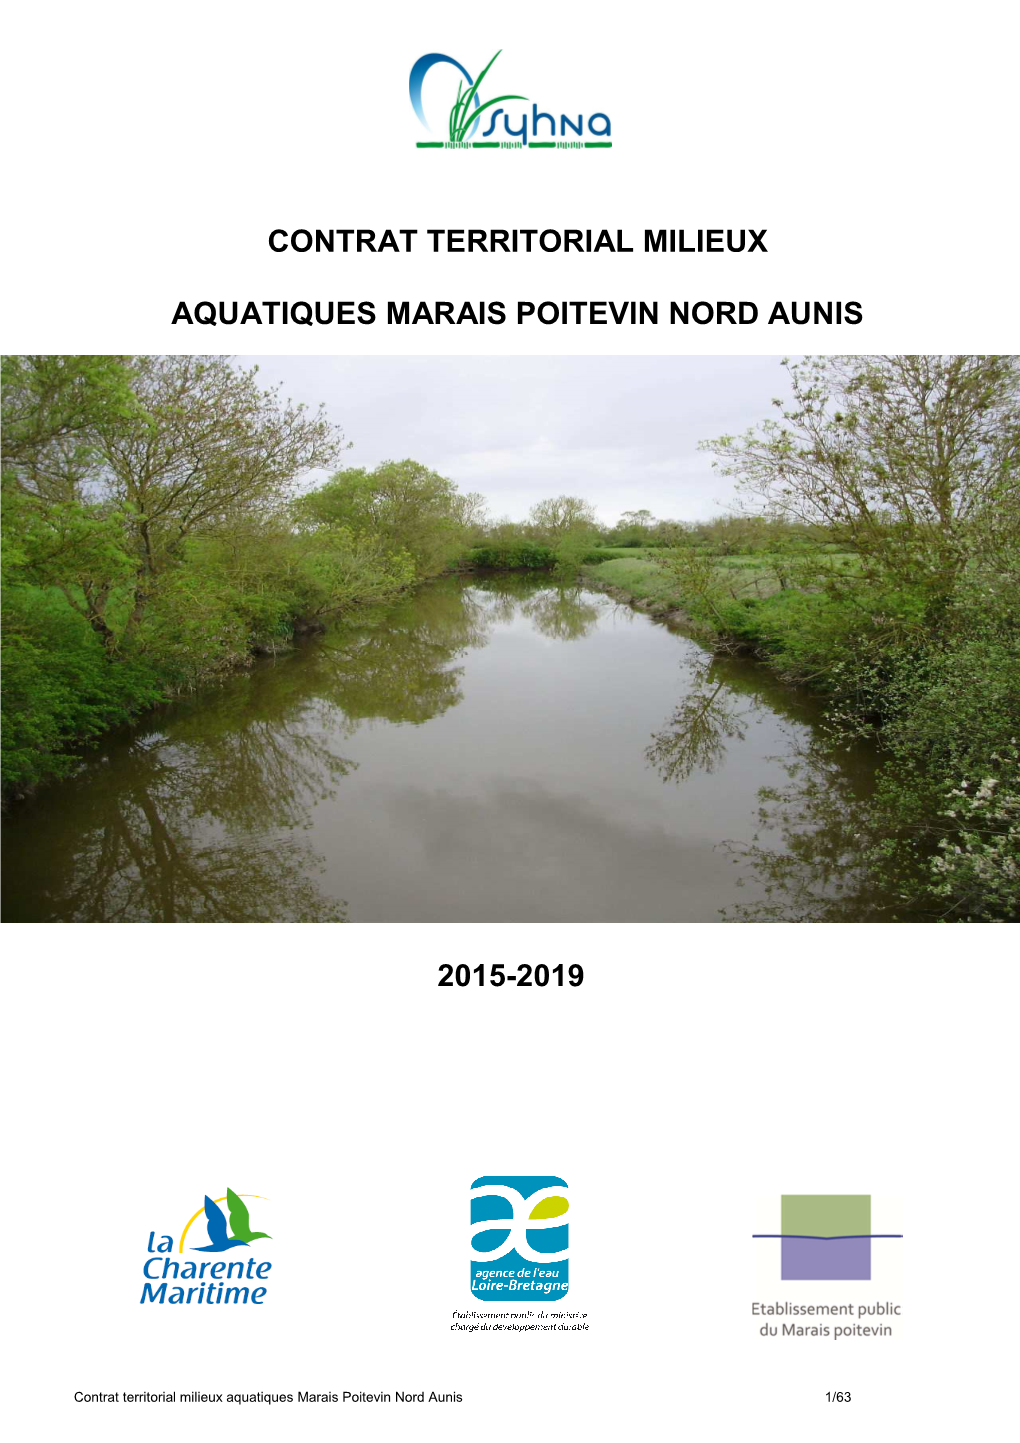 2015-2019 Contrat Territorial Milieux Aquatiques Marais Poitevin Nord Aunis